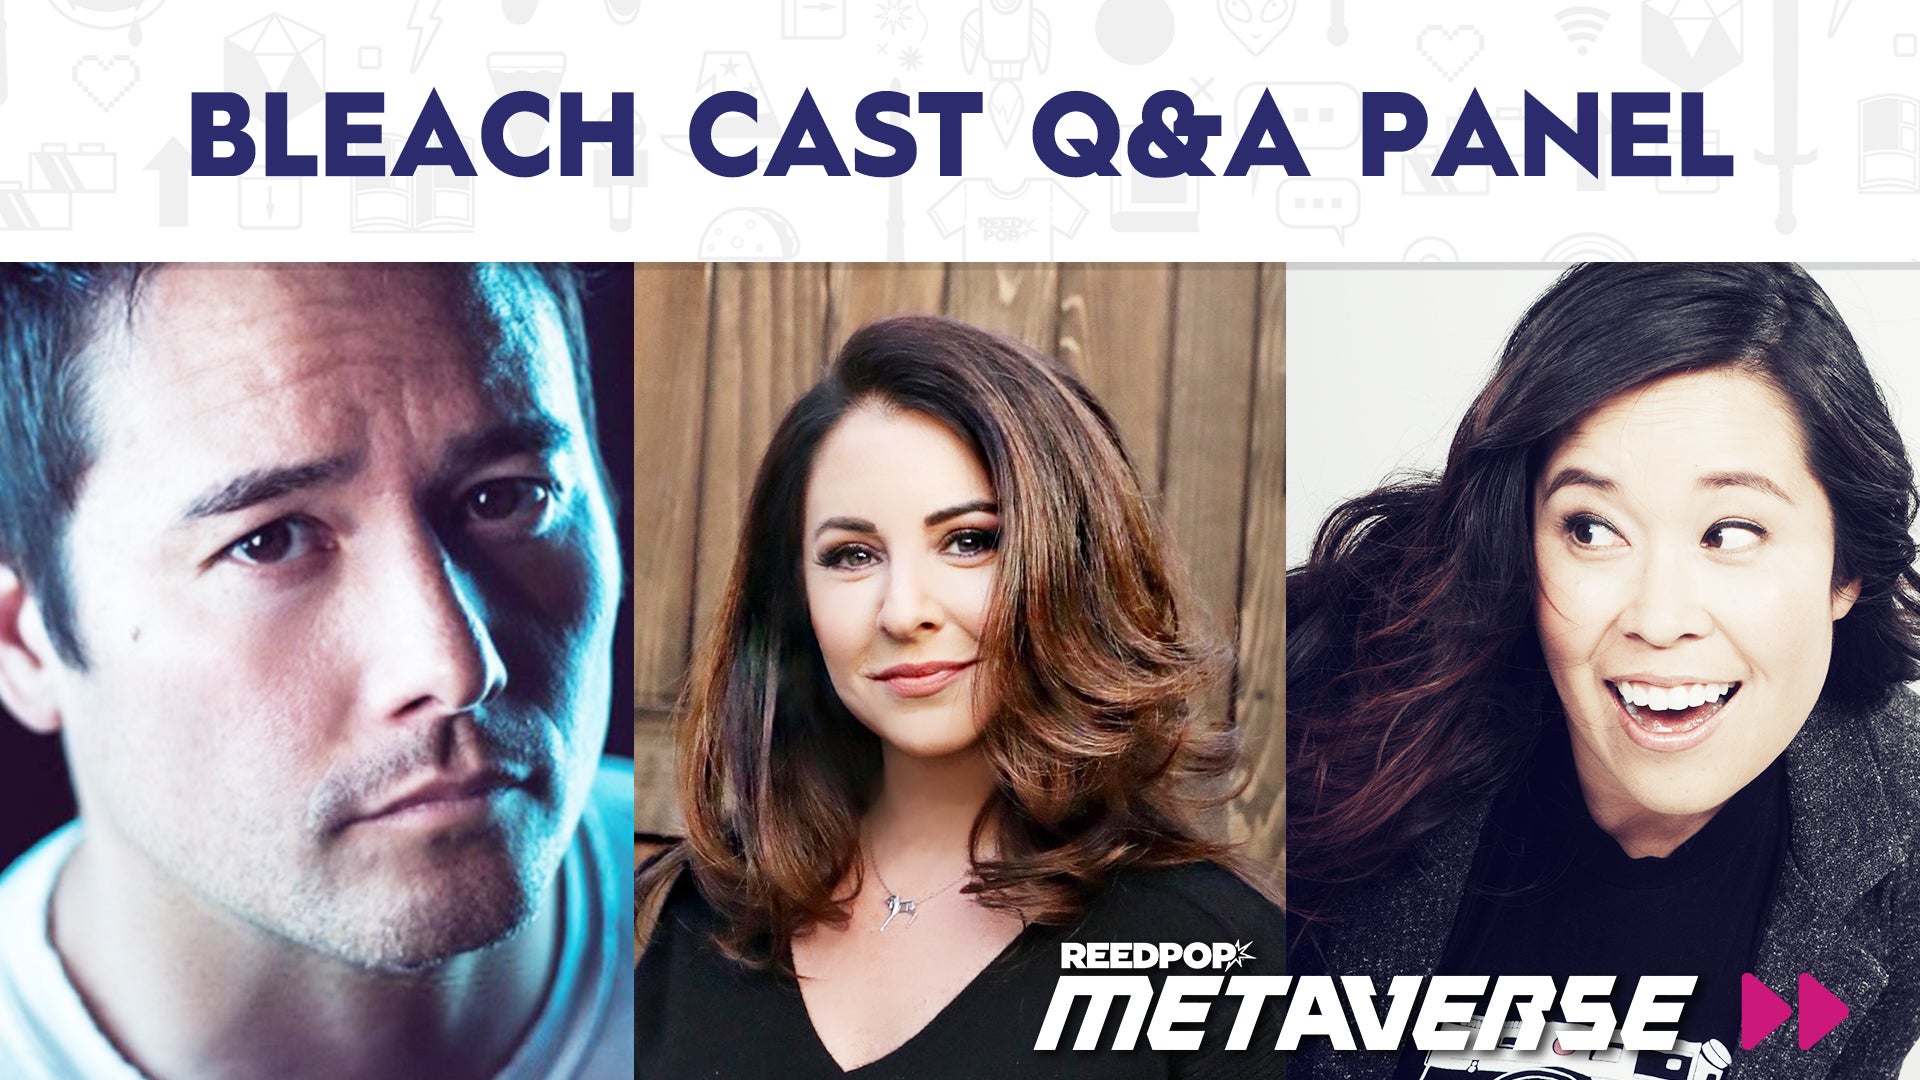 Image for Bleach Cast Q&A Panel